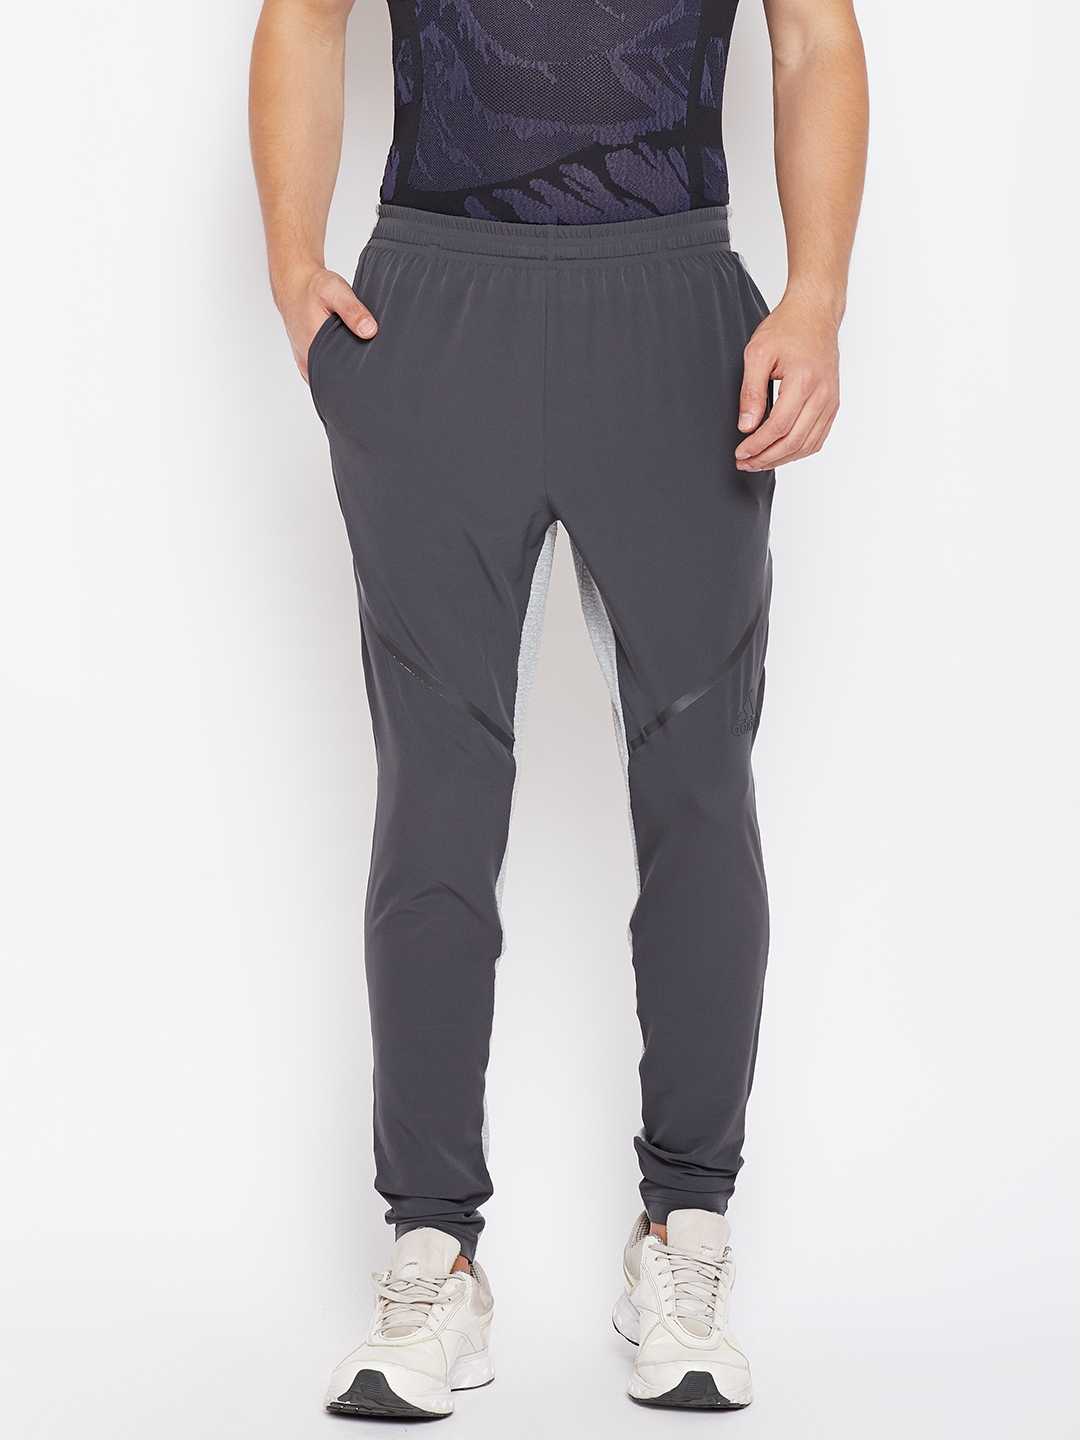 Buy ADIDAS Men Charcoal Grey Woven Extreme Colourblocked Track Pants ...